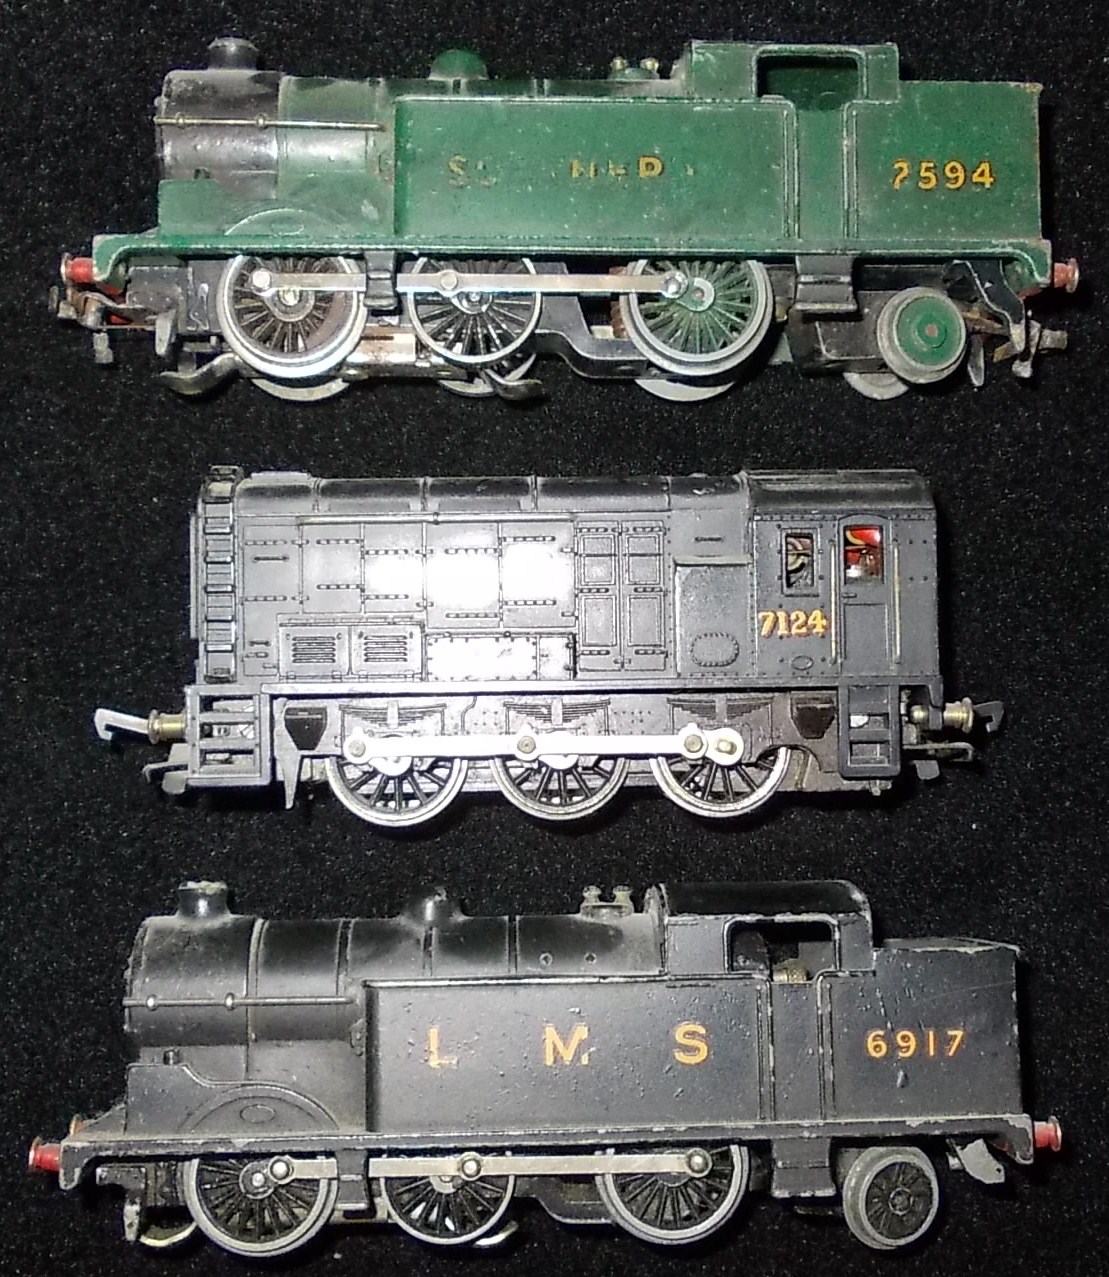 (3) Hornby Dublo. 0-6-2T loco. 6917, black, L.M.S.; 0-6-2T loco. 2594, green, S.R.; 0-4-0 diesel